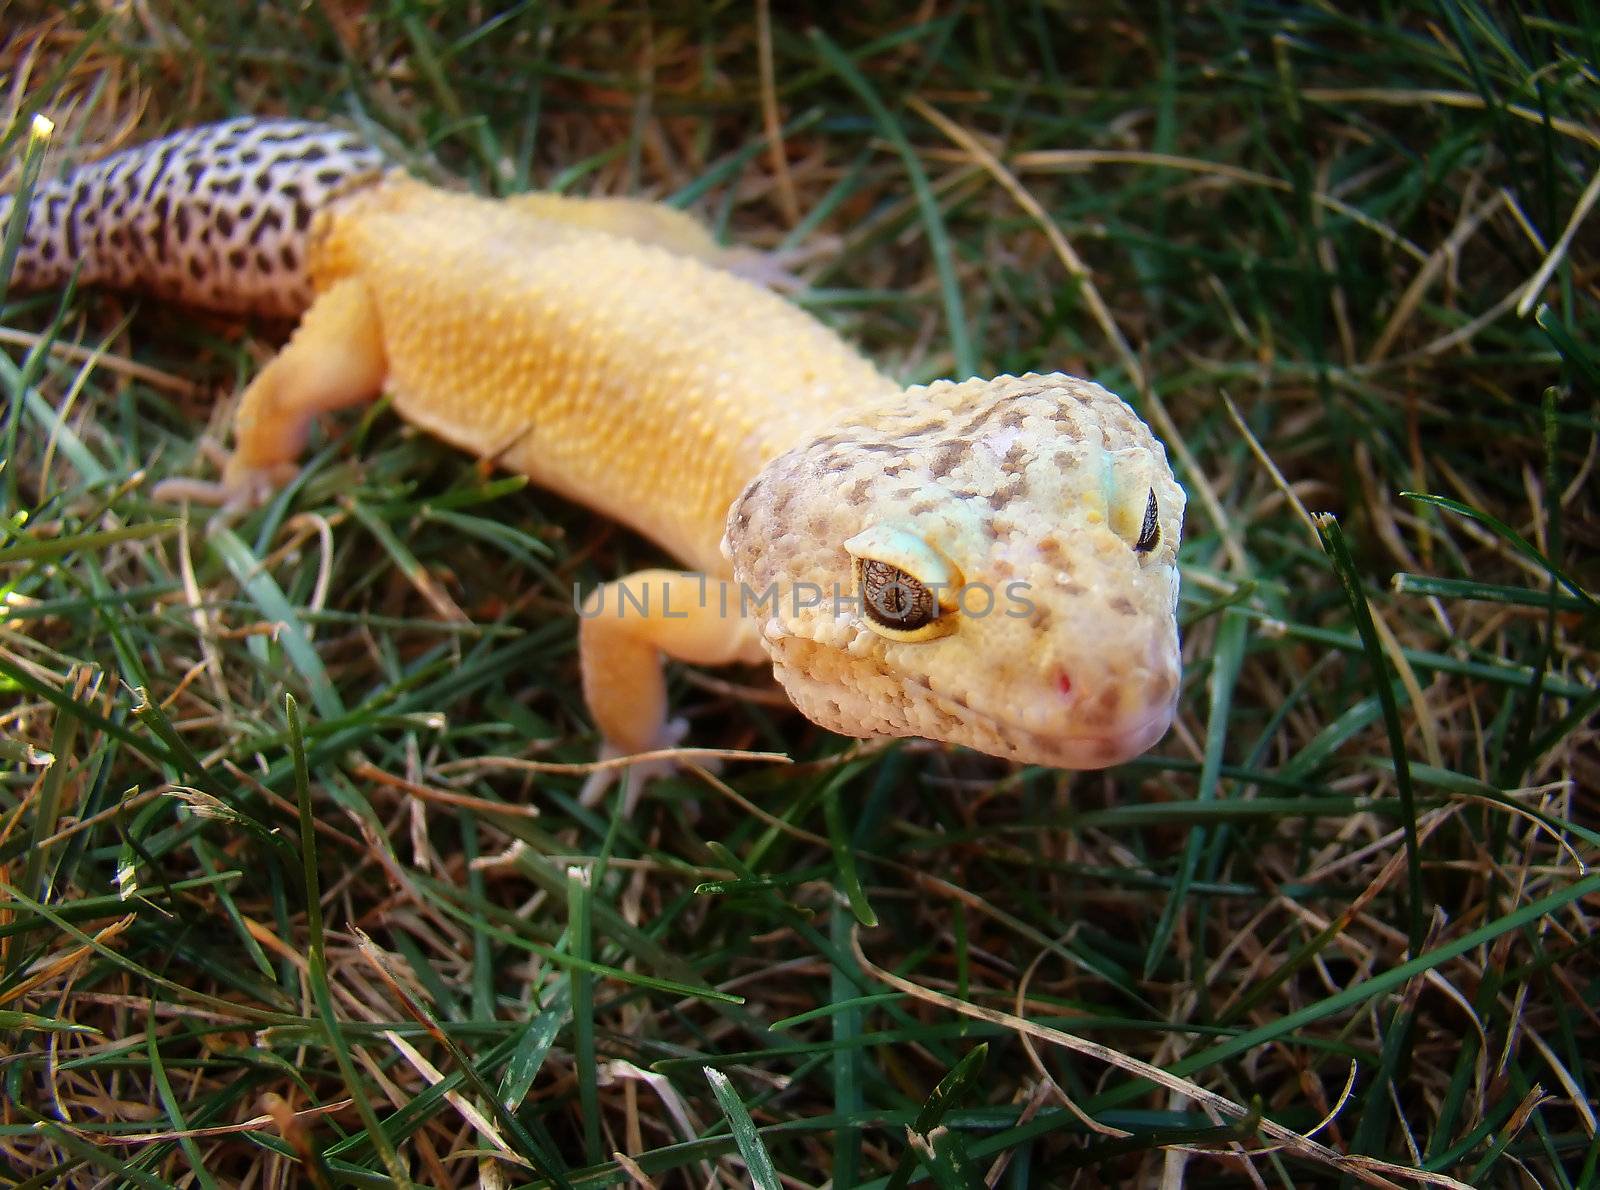 a healthy adult male tangerine leopard gecko